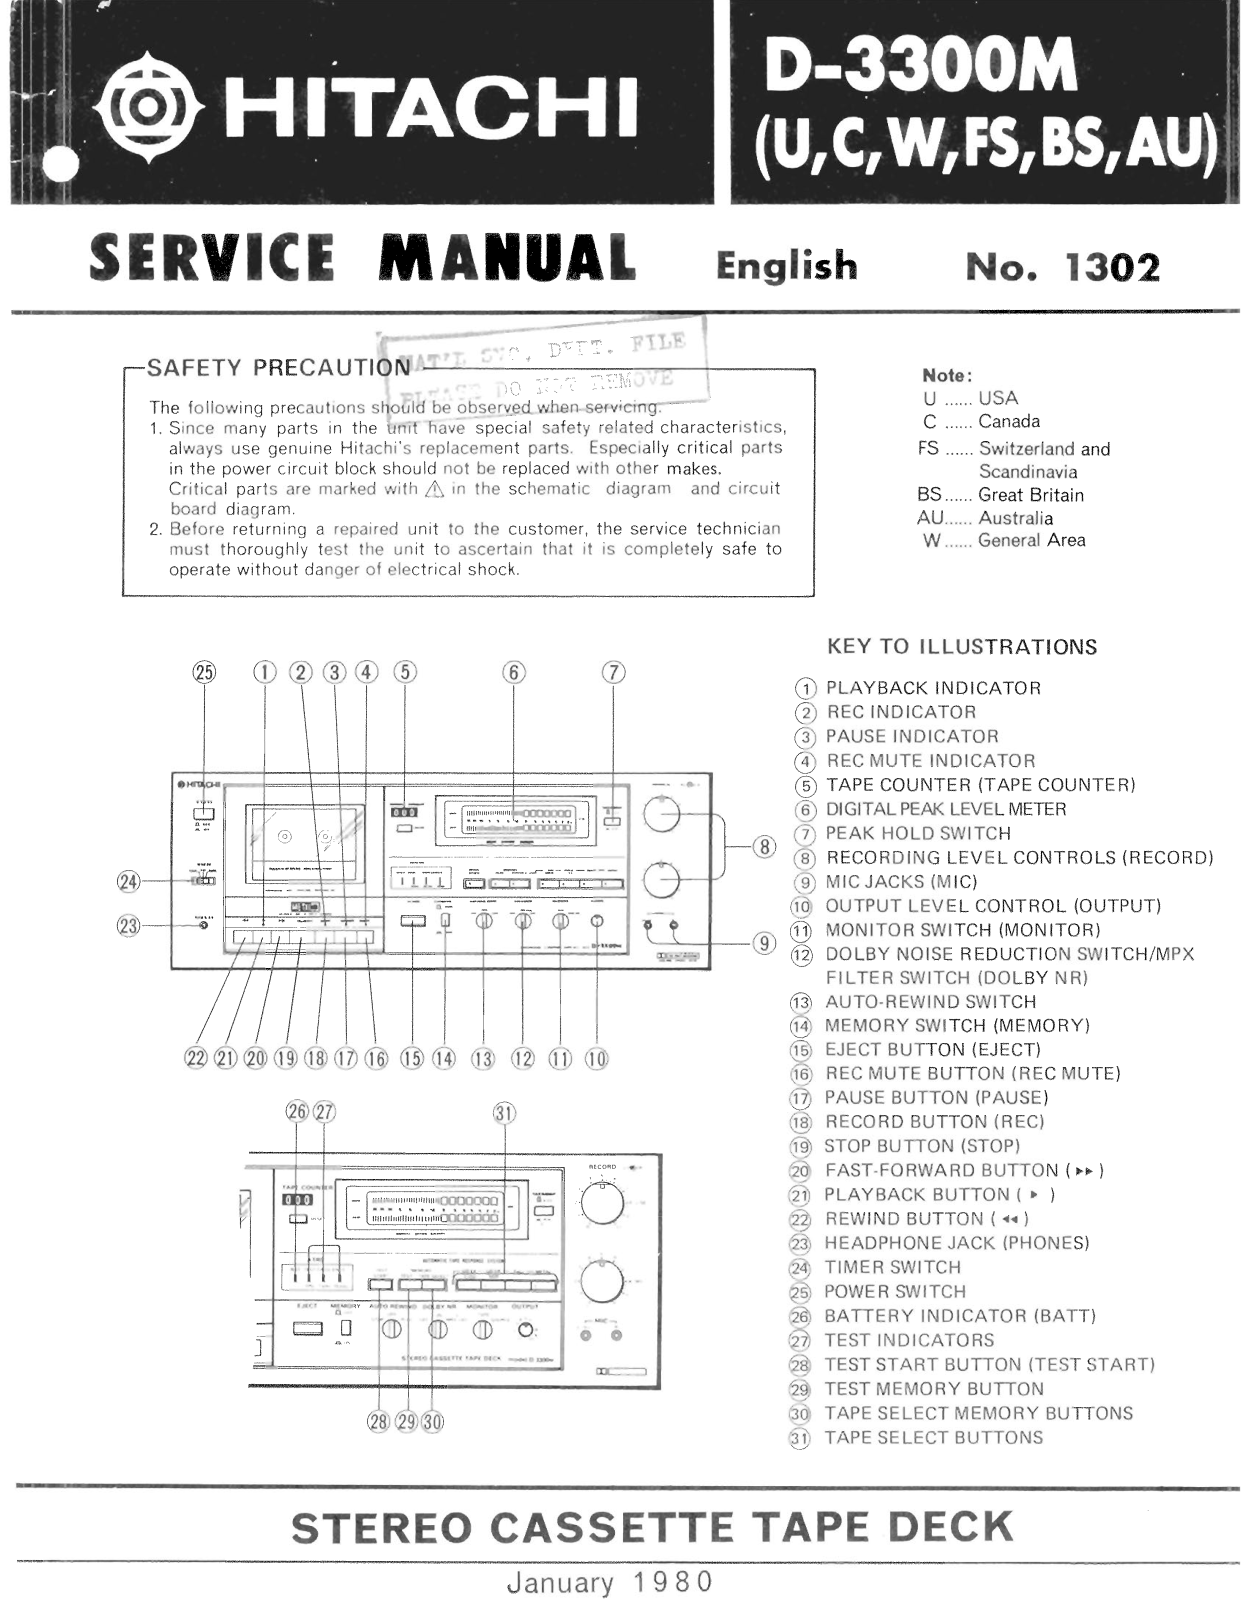 Hitachi D-3300-M Service Manual